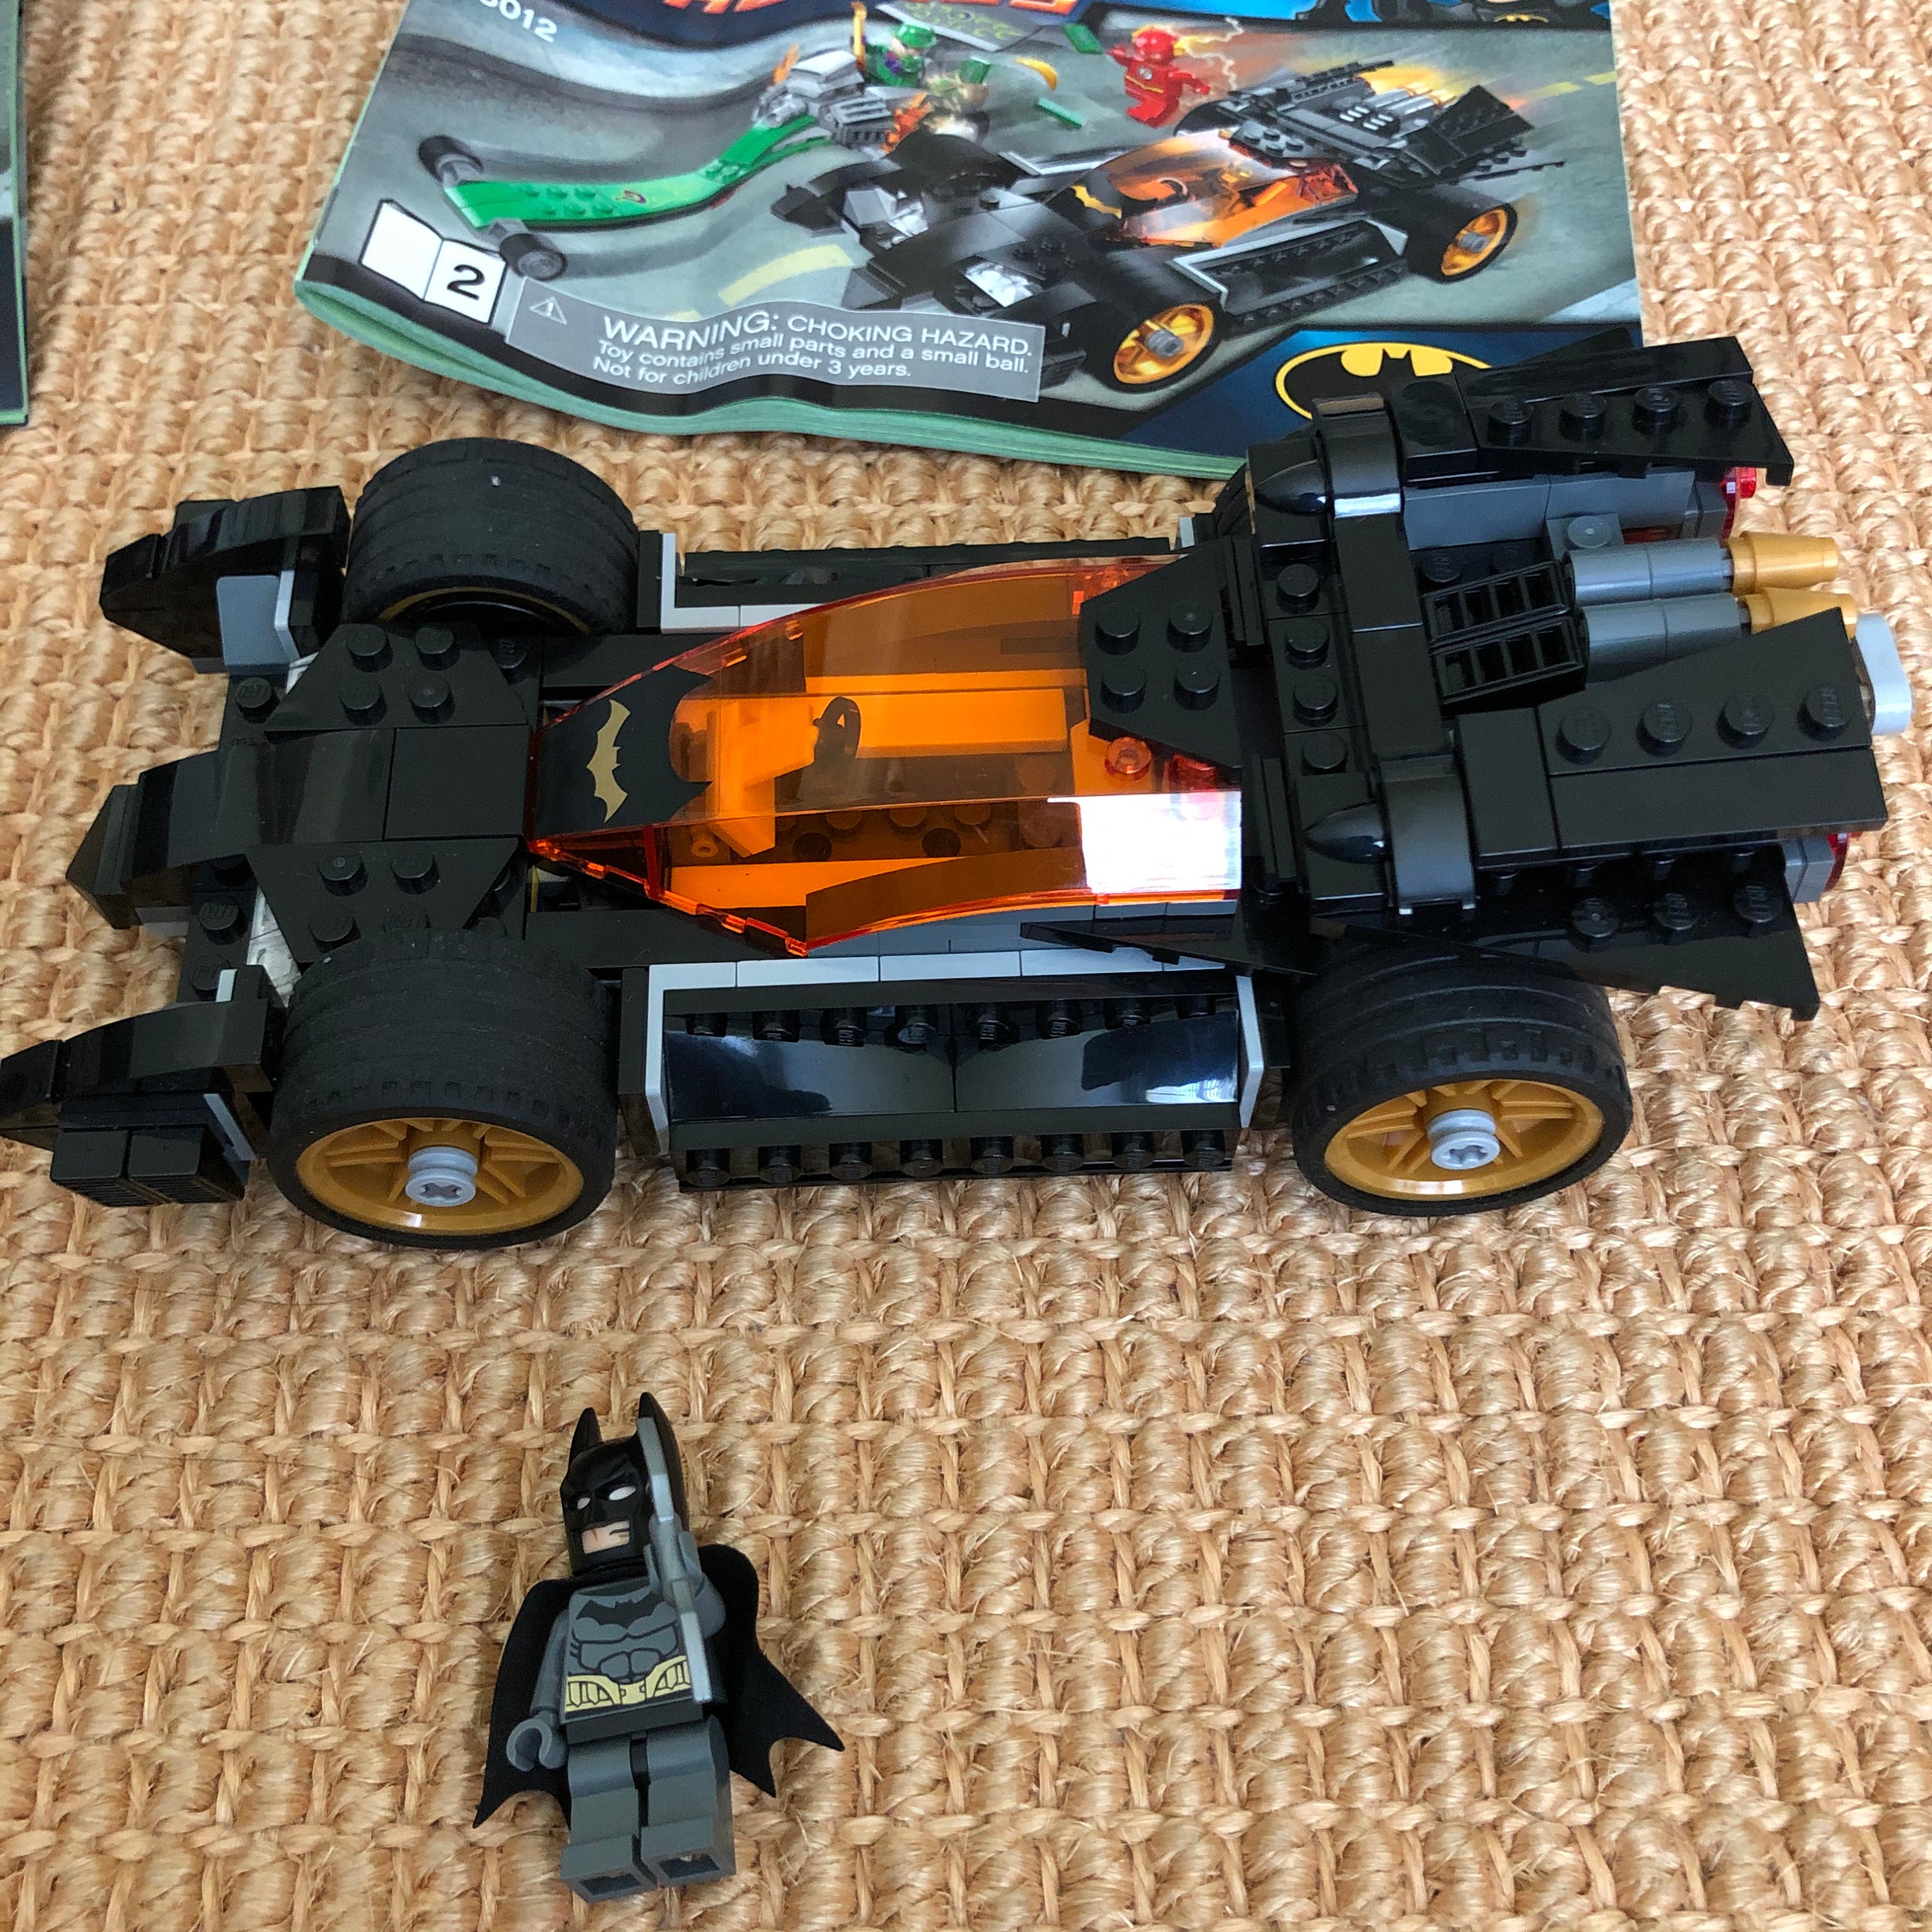  LEGO Superheroes 76012 Batman: The Riddler Chase : Toys & Games